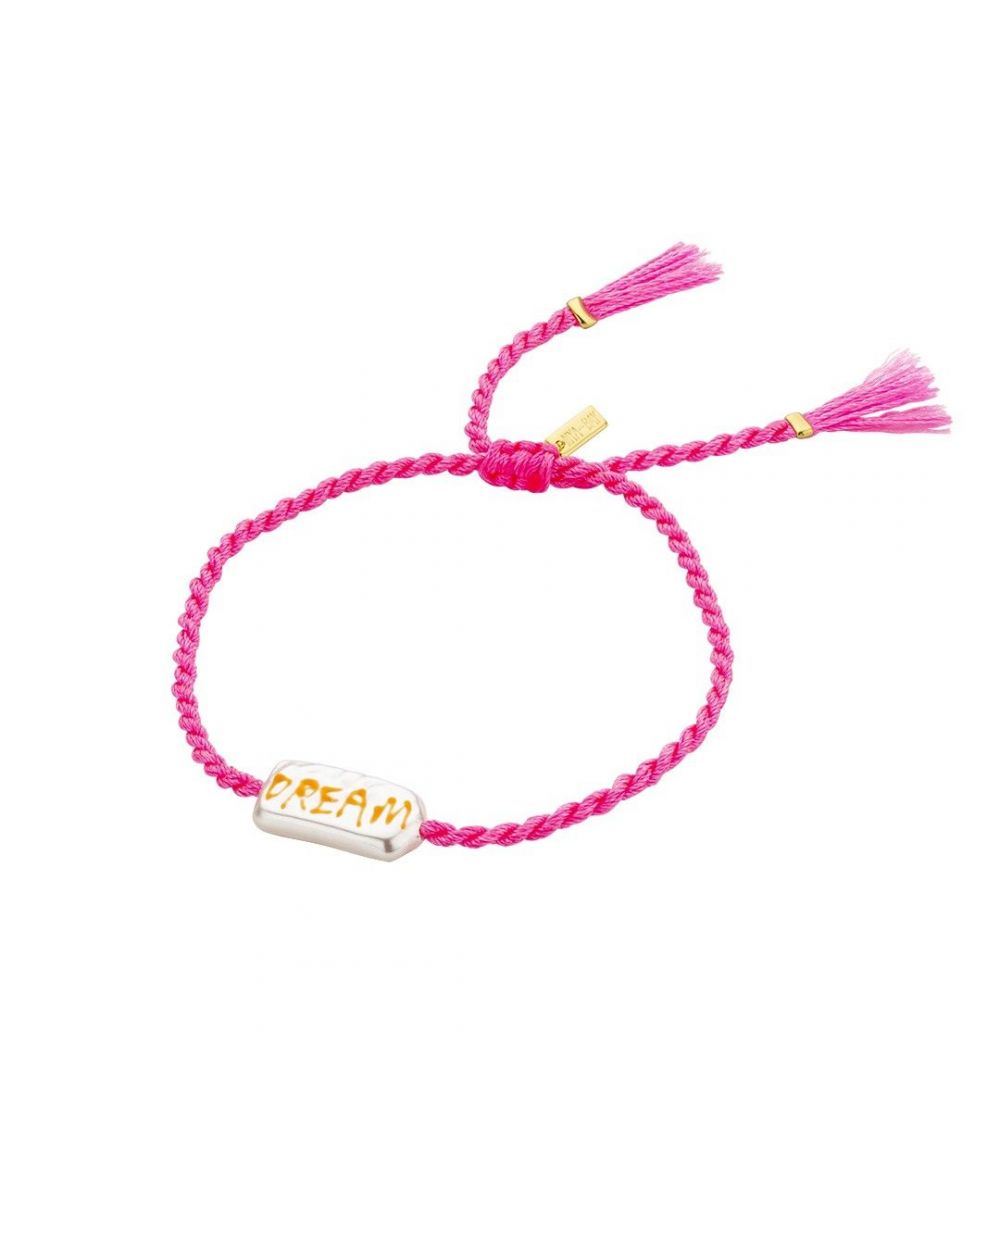 Bracelet MYA BAY - Pearl Dream - BR-178 - Bijoux Mya Bay